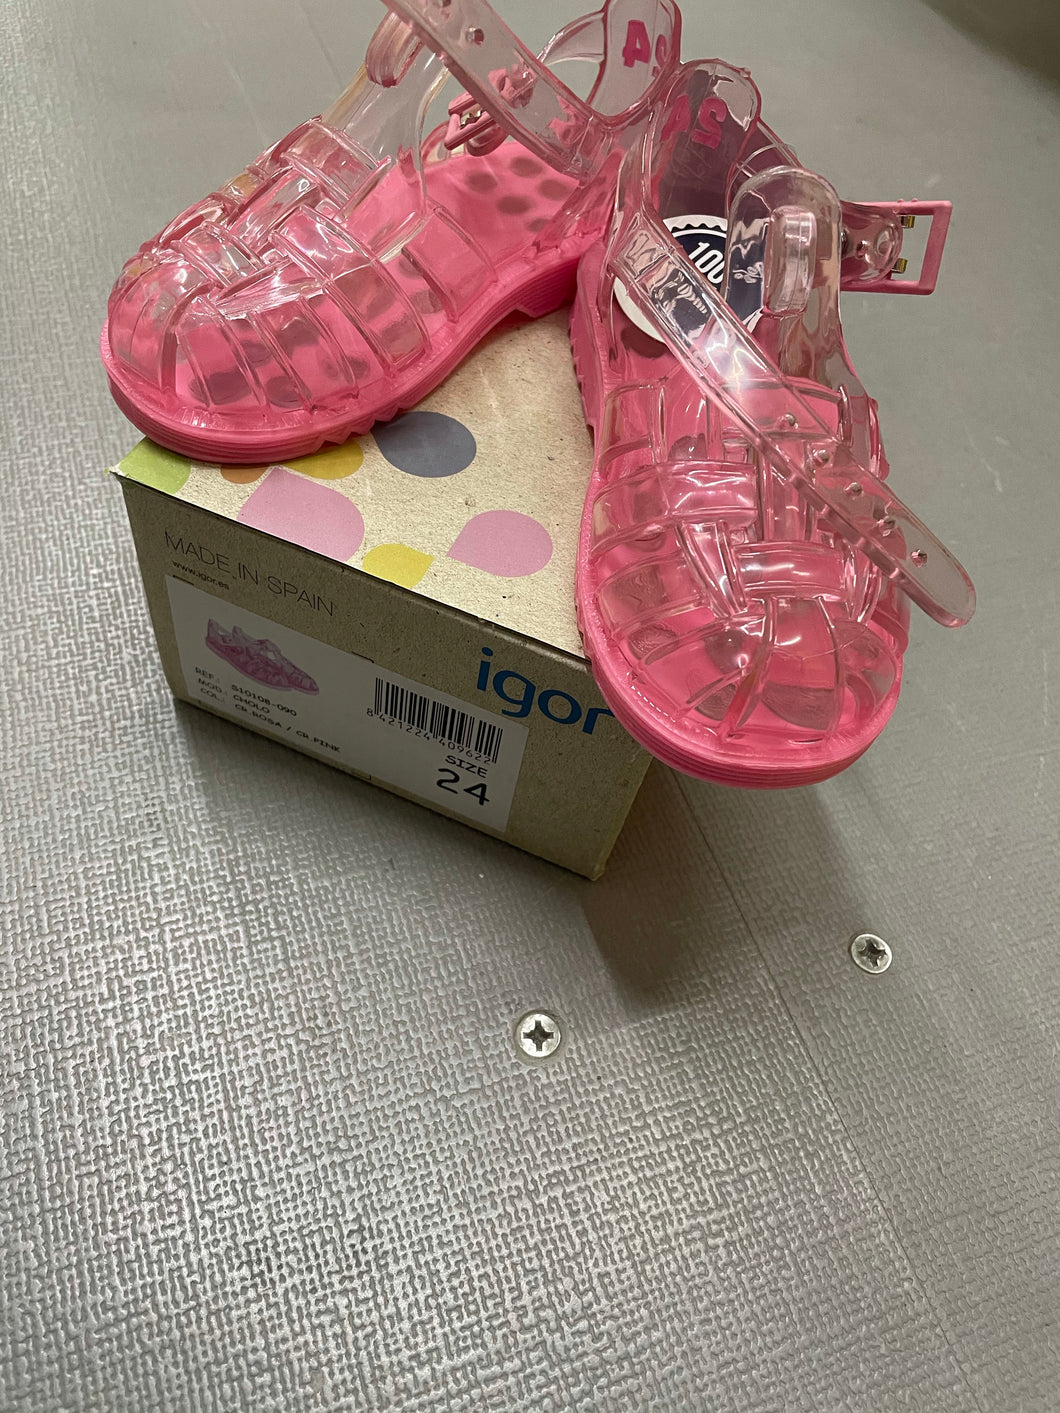 Pink Igor jellies